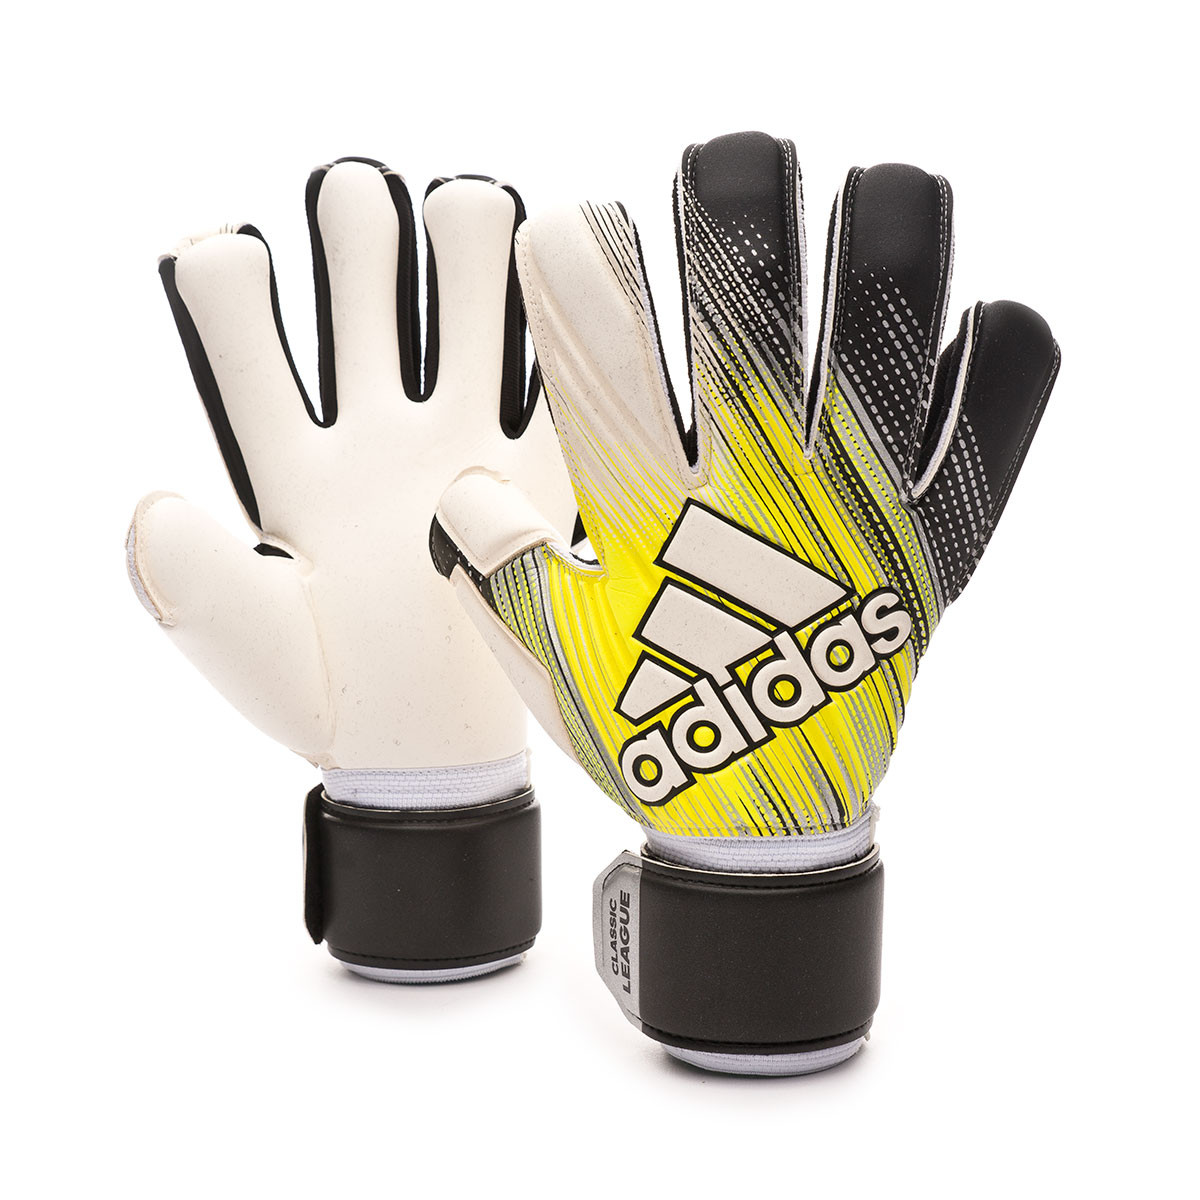 adidas classic gloves